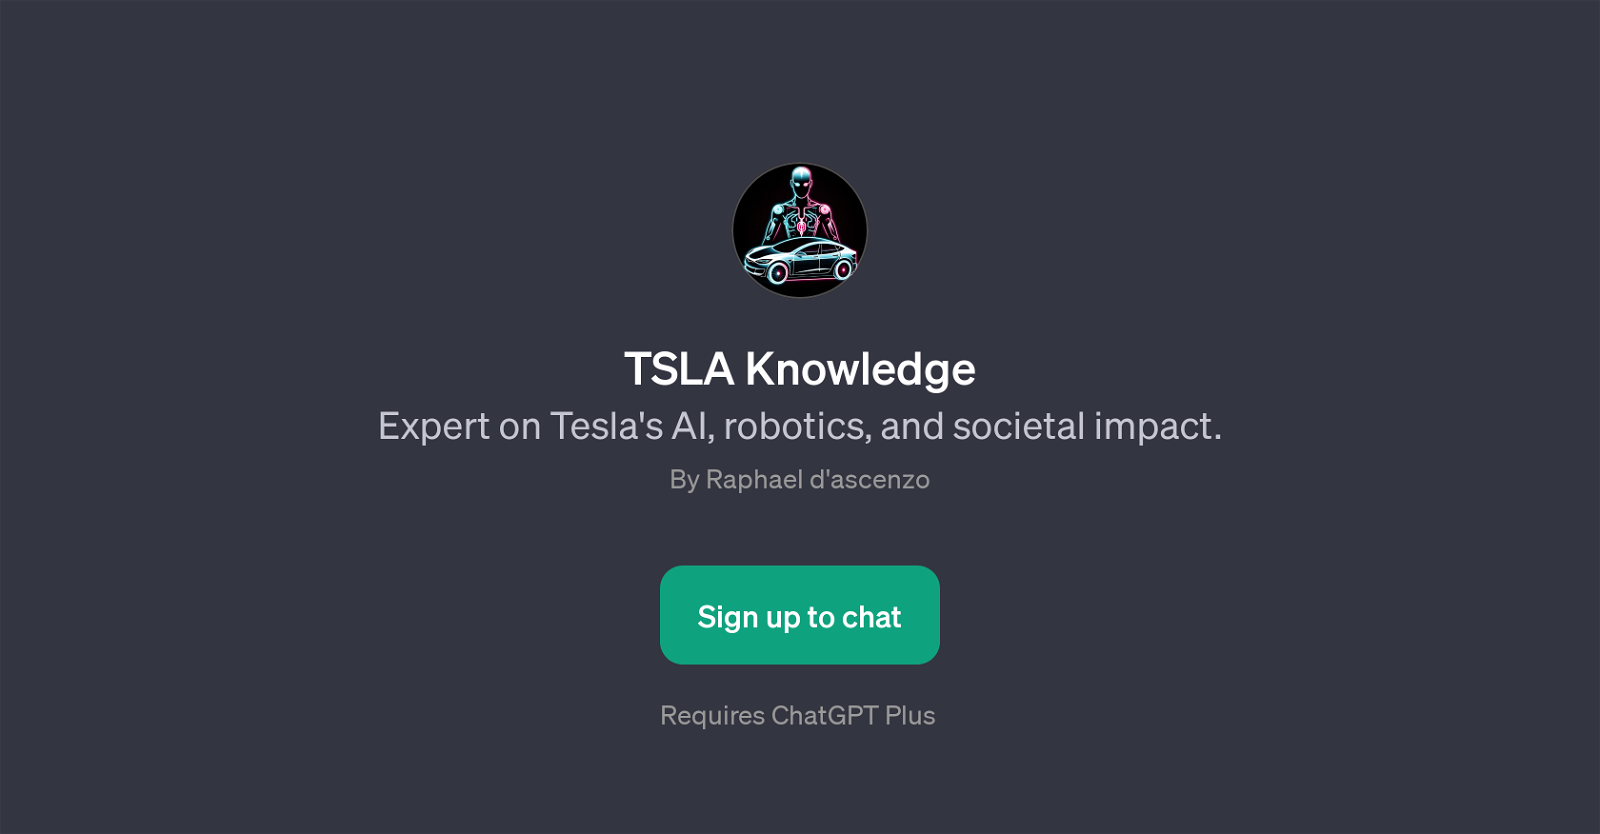 TSLA Knowledge website